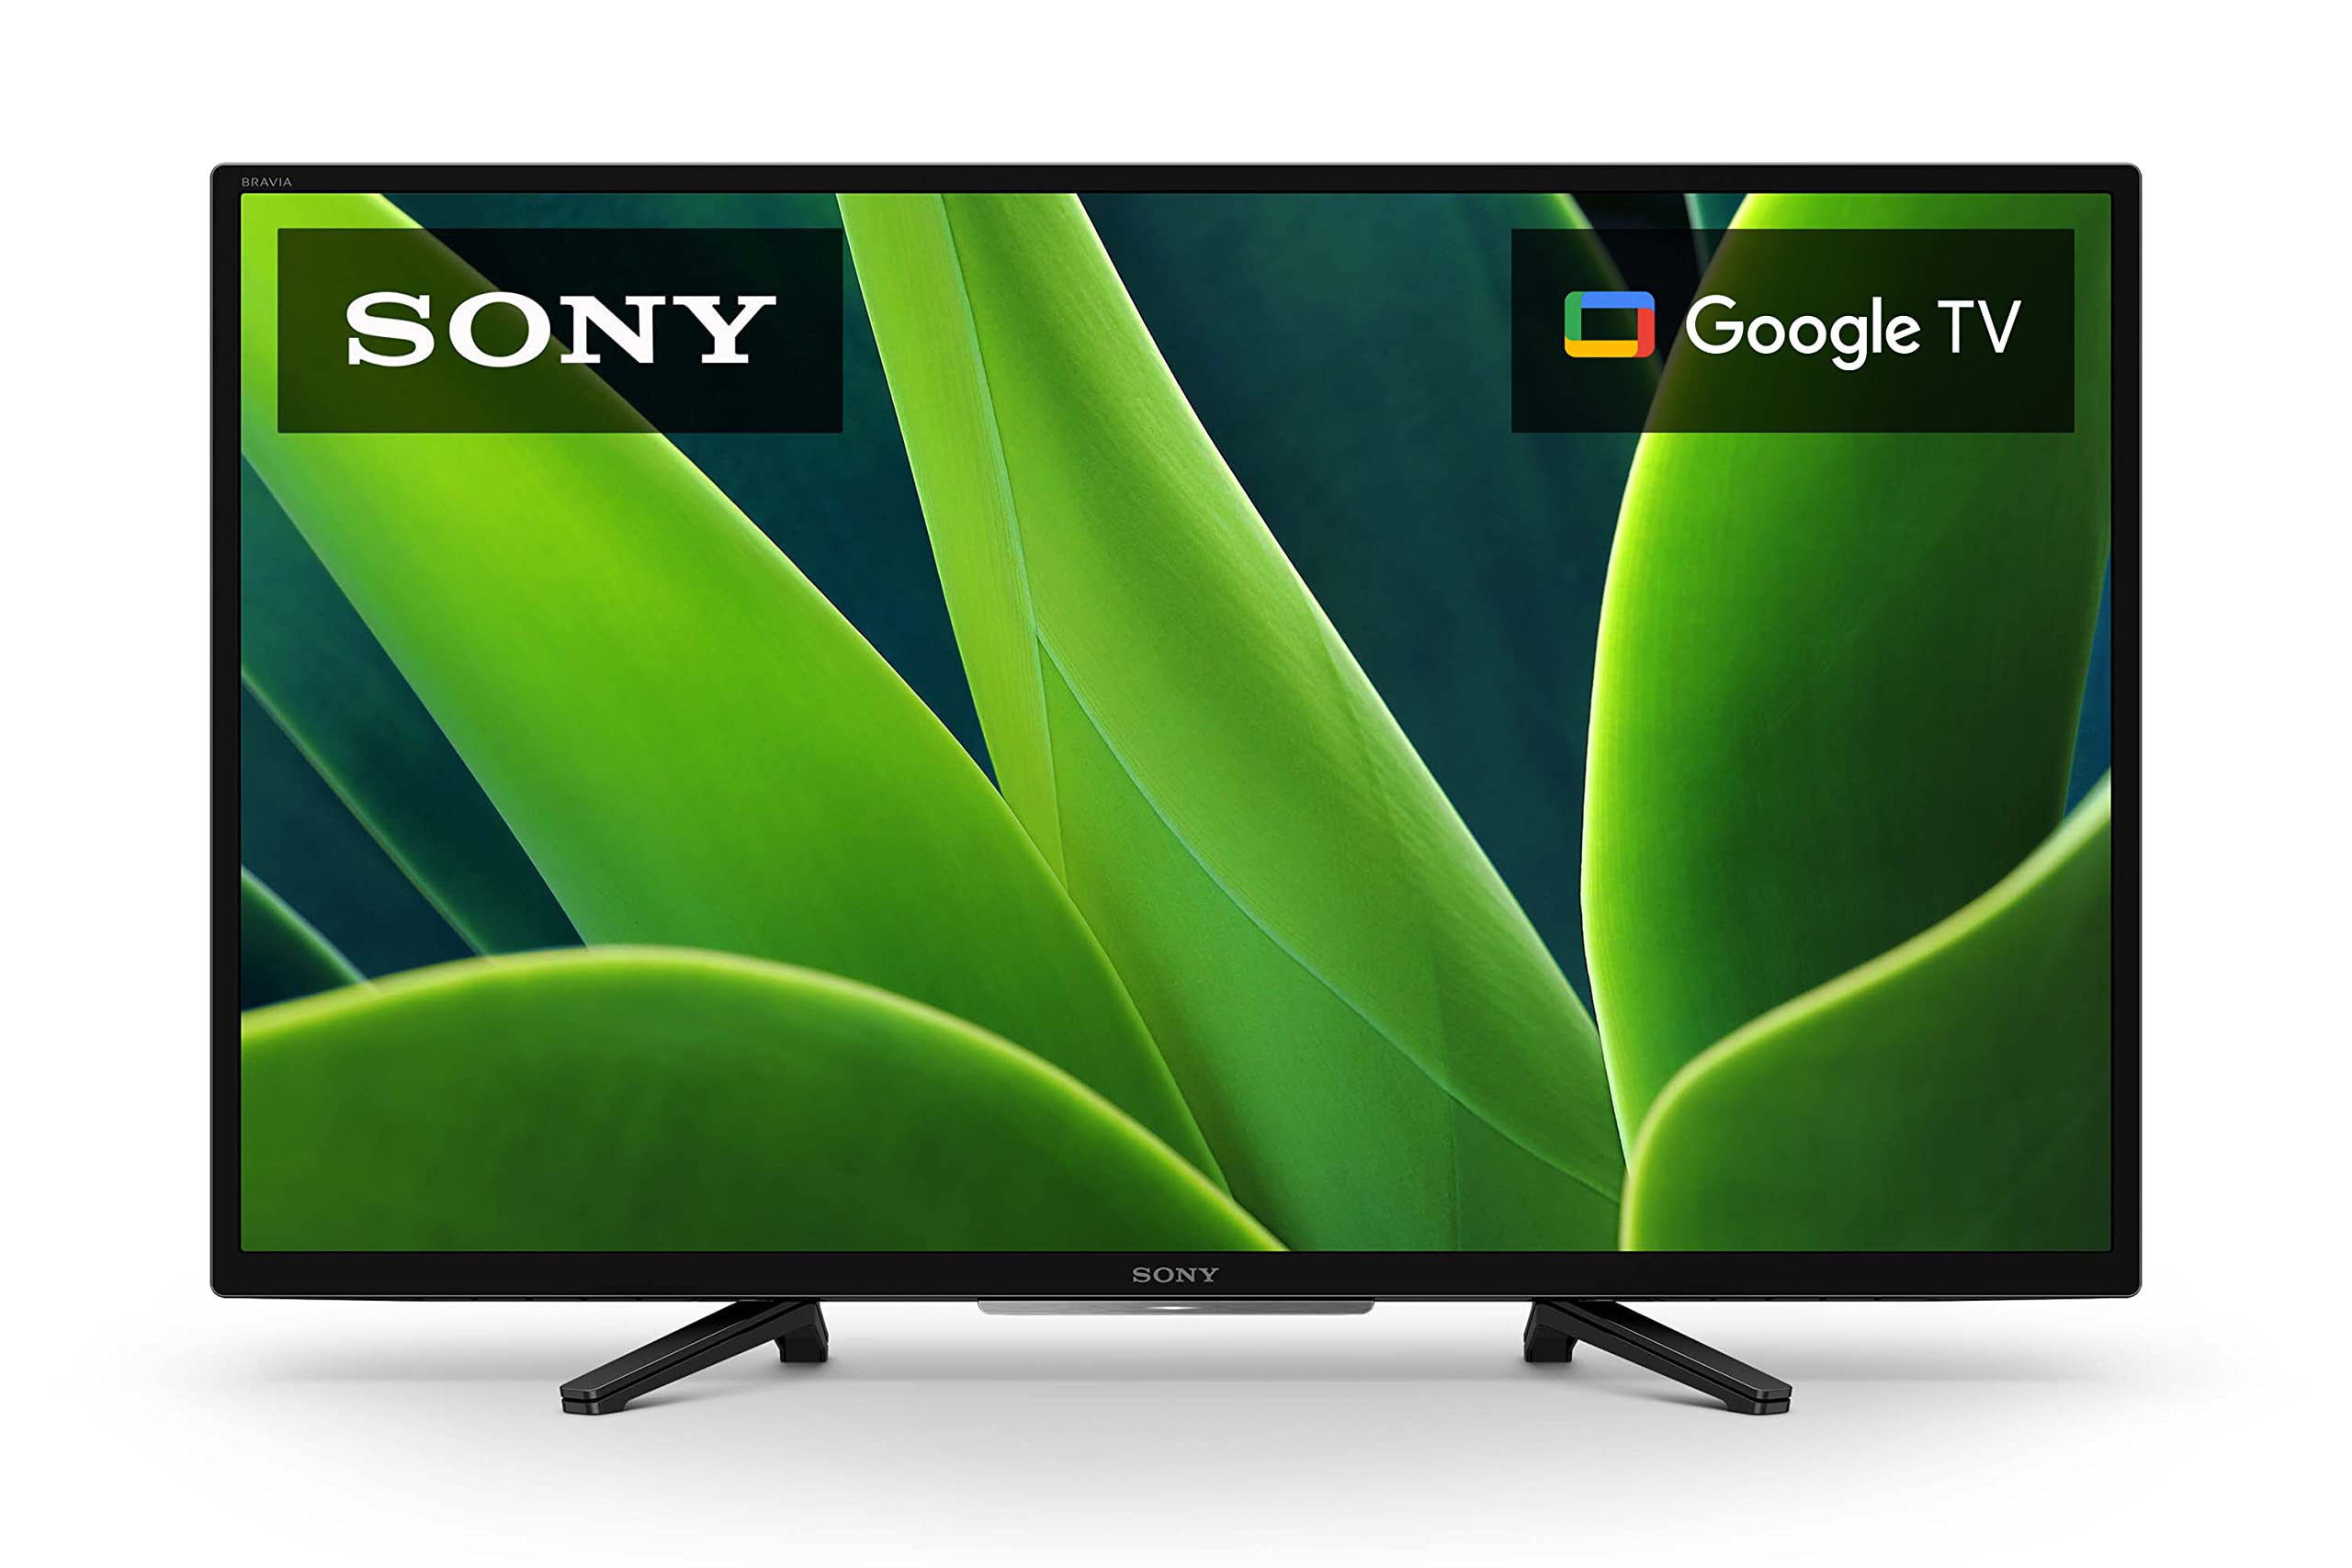 Sony 32인치 720p HD LED HDR TV W830K 시리즈 with Google TV 및 Google Assistant-2022 모델